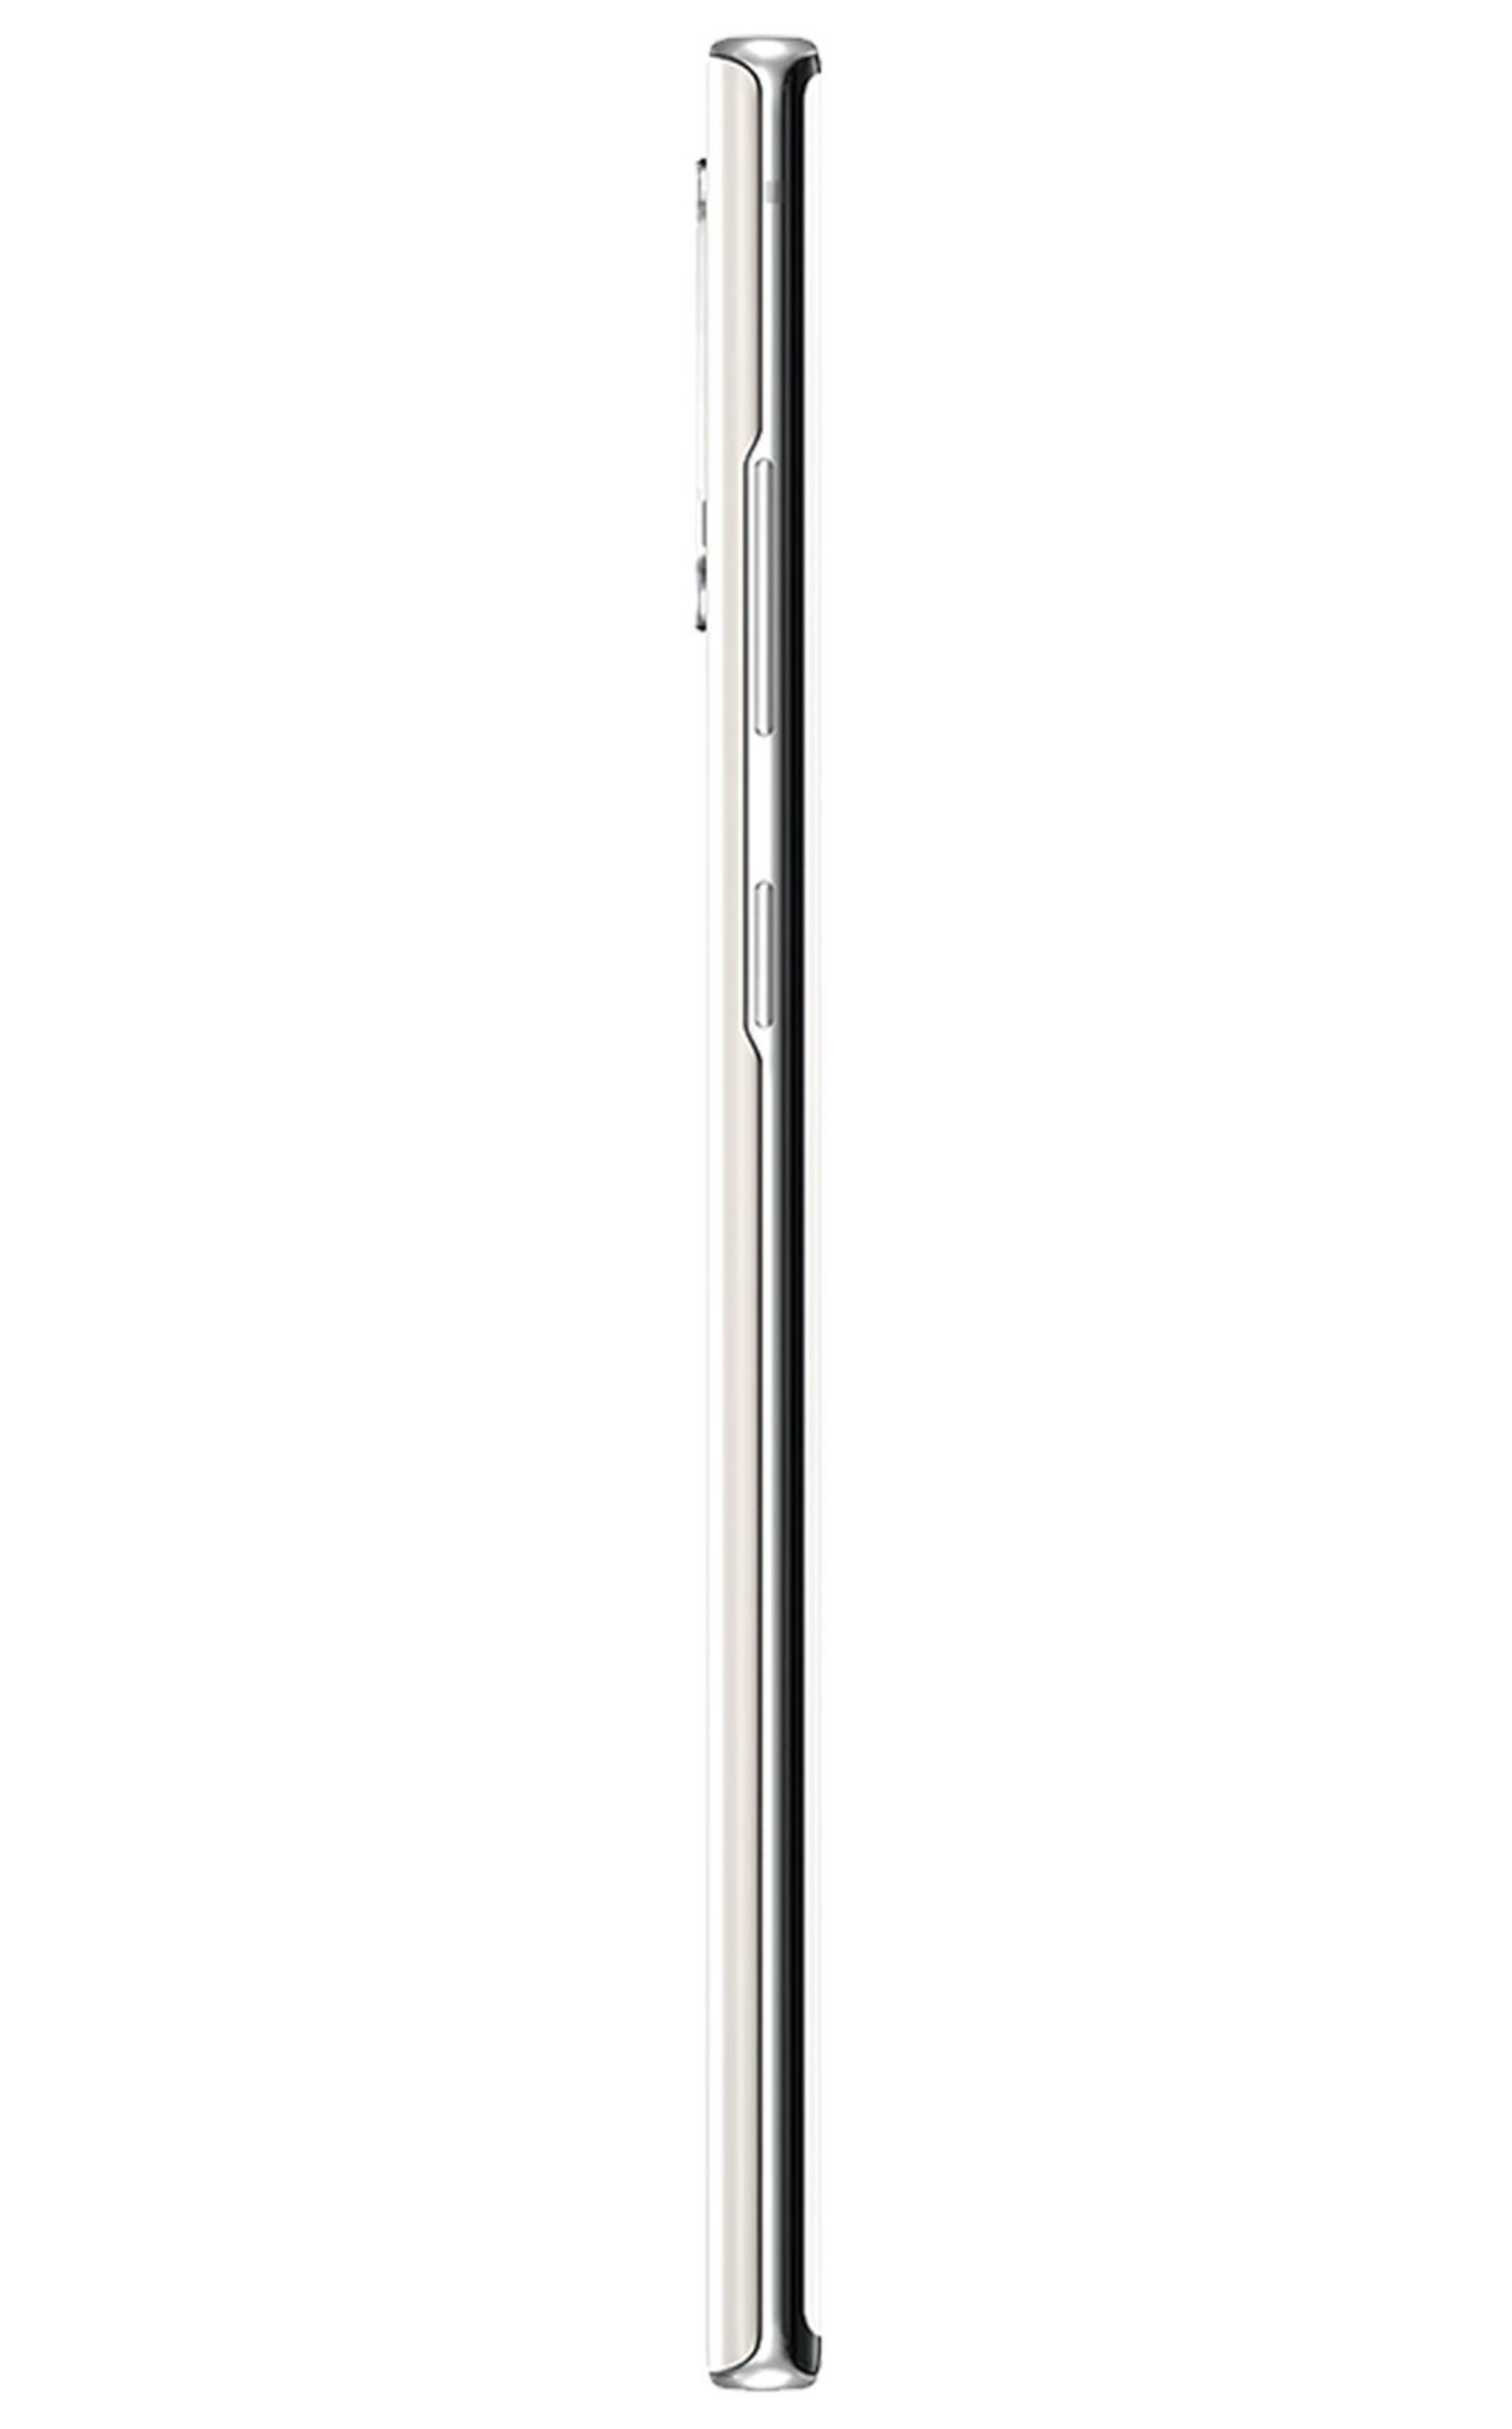 Samsung Galaxy Note 10+ Note10 Plus N975U 256GB Android Smartphone, Aura  White, T-Mobile Locked (Renewed)